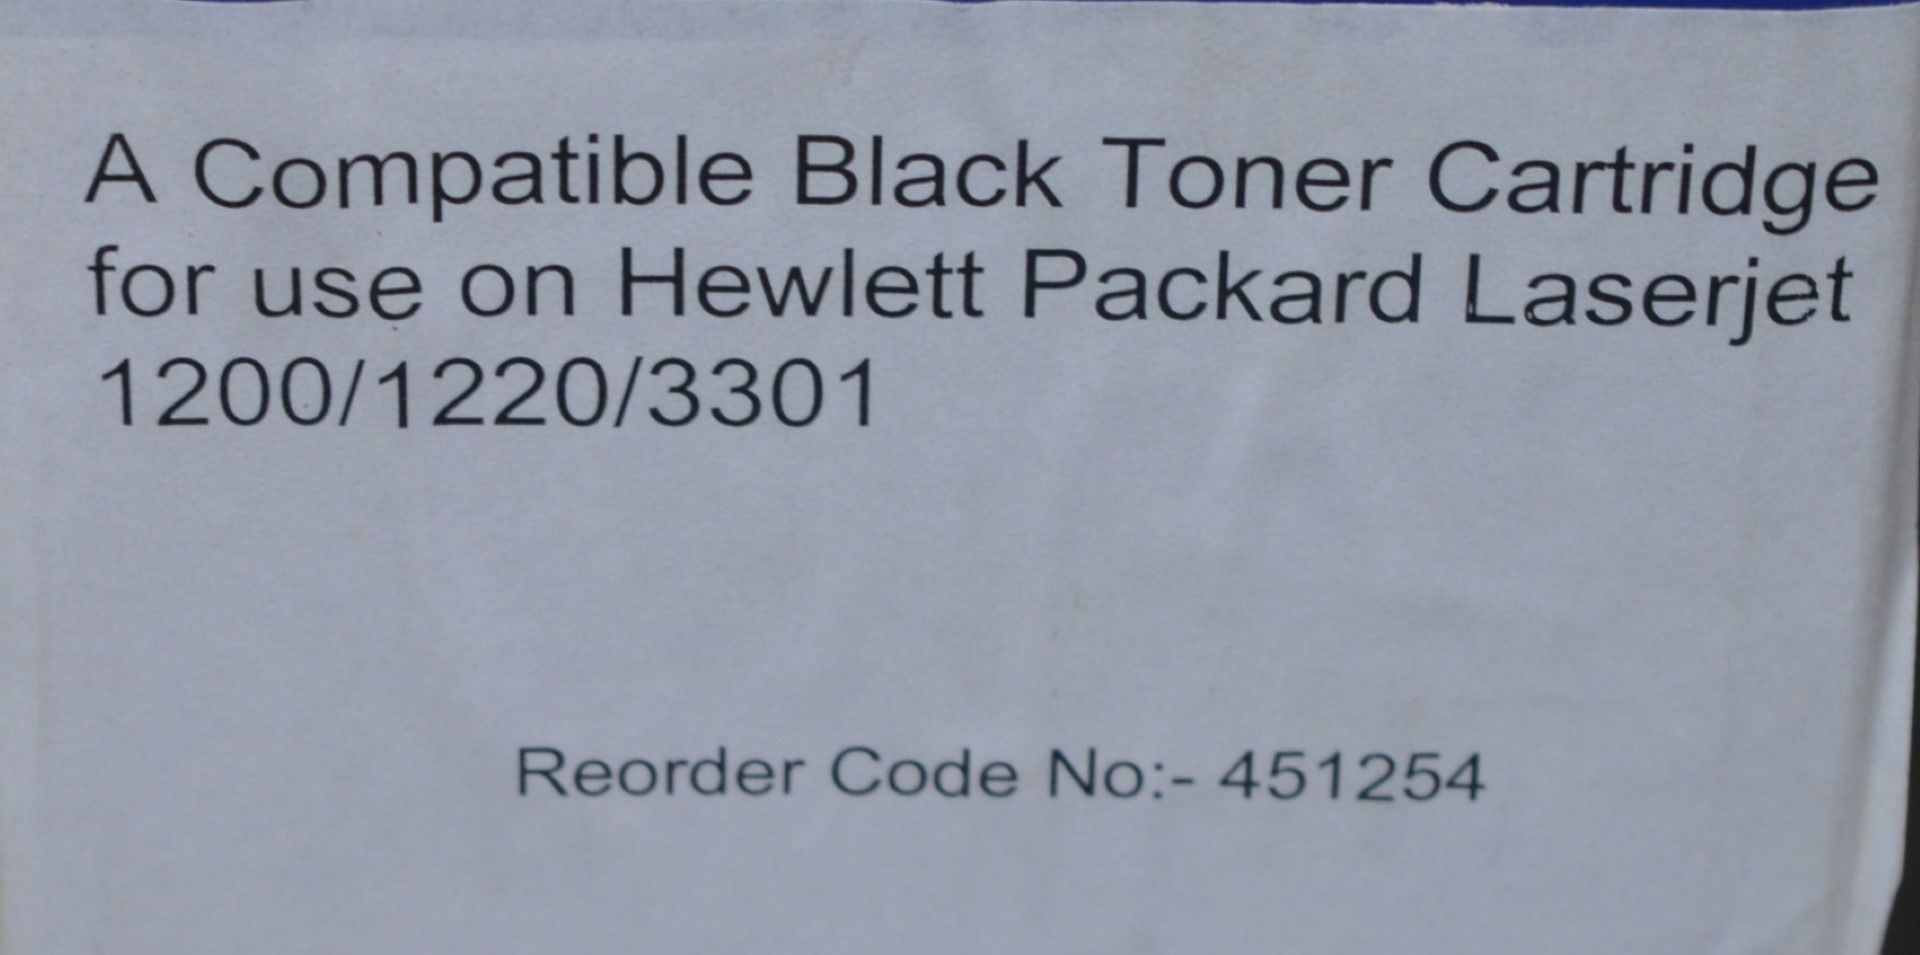 2 x HP Laserjet 1200 Toner Cartridges - Unused Stock - Suitable For HP Laserjet 1200,1220,3301 - Image 2 of 2